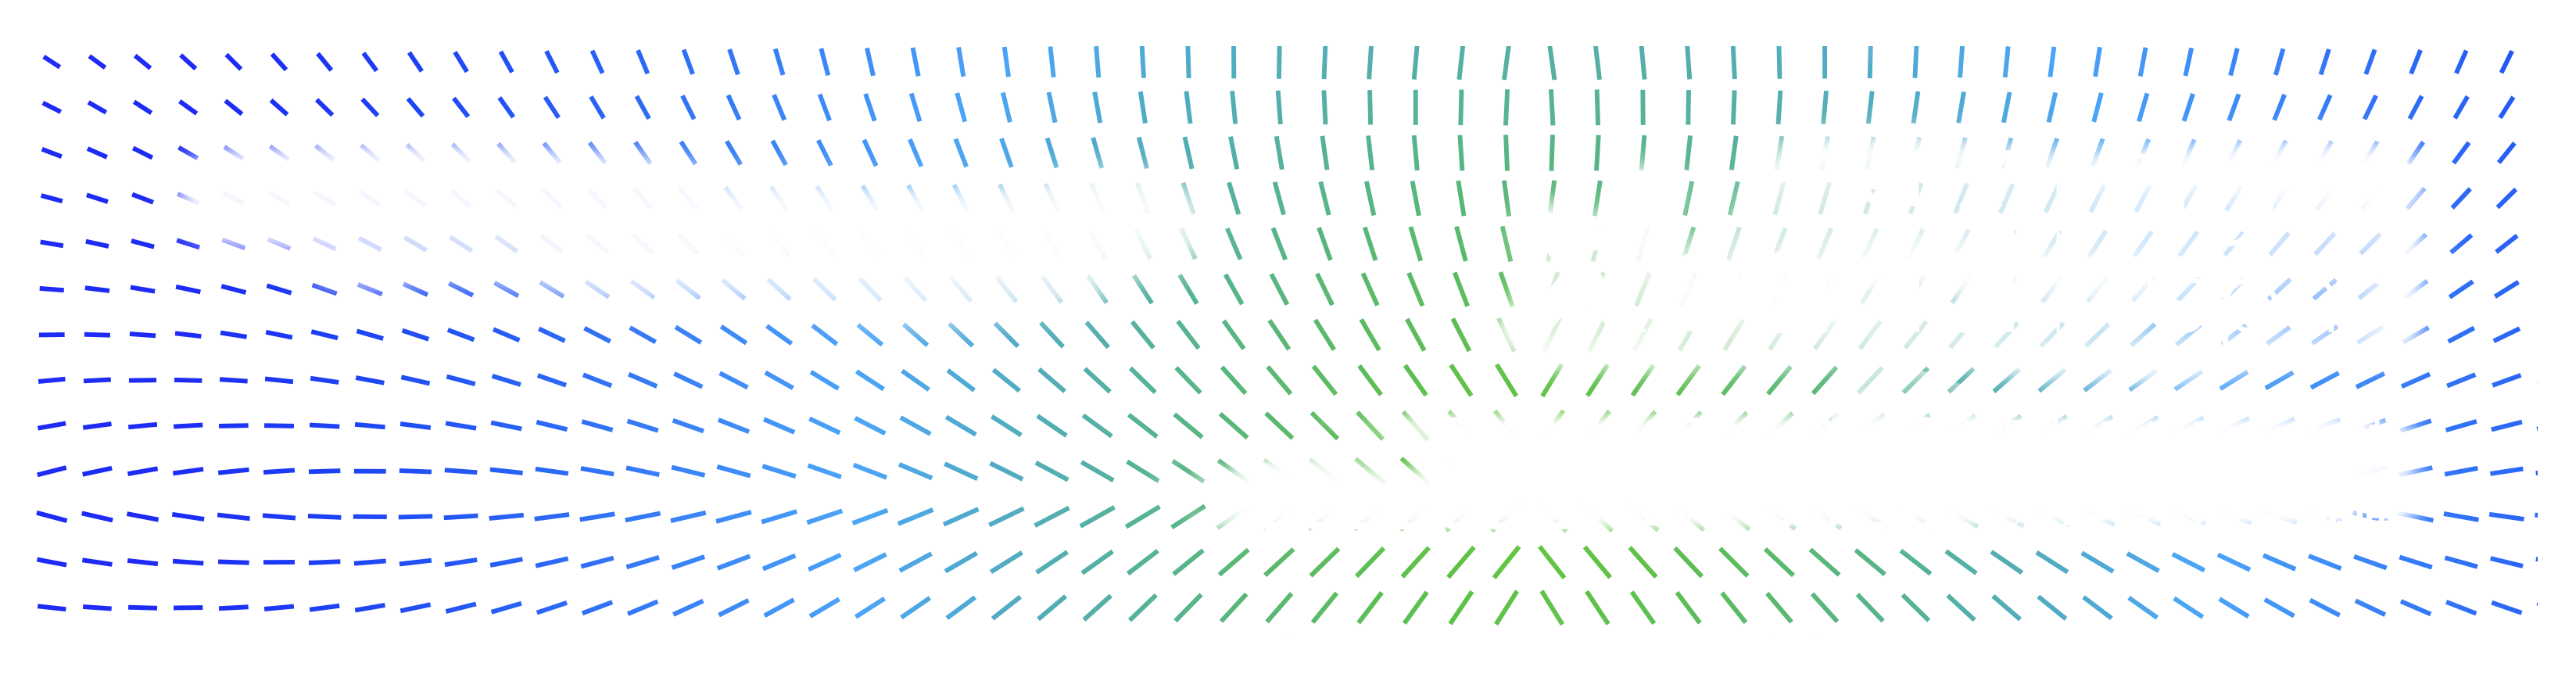 Trellix Xpand Digital Japan 2022.05.25(水) - 05.26(木)開催